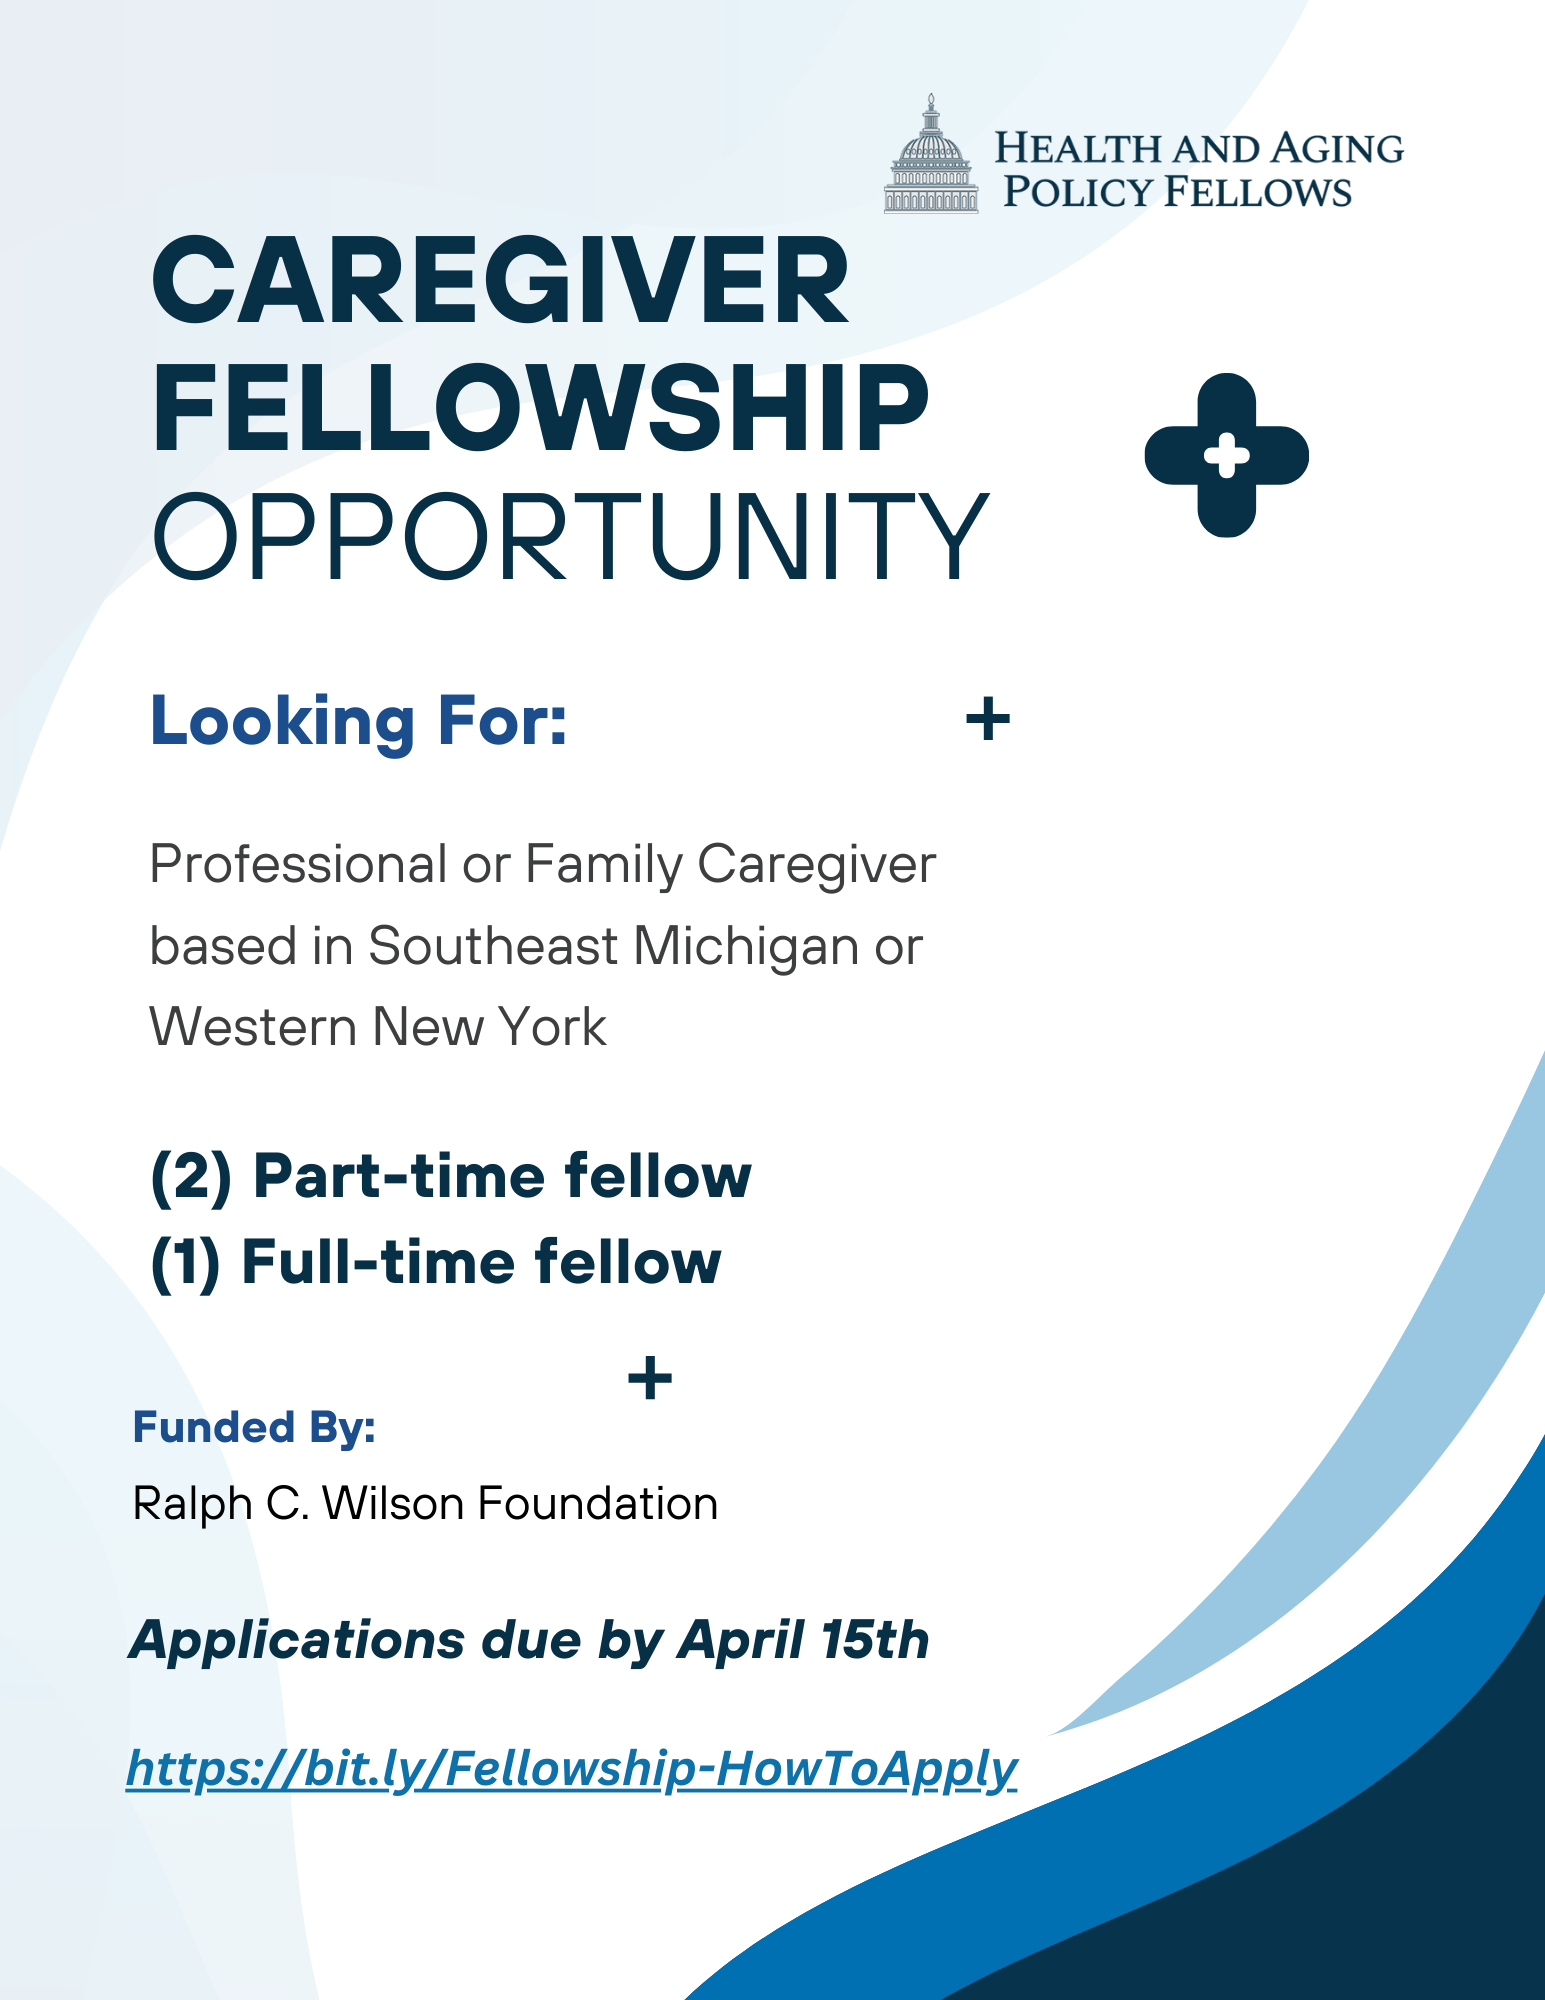 Caregiver fellowship opportunity flyer